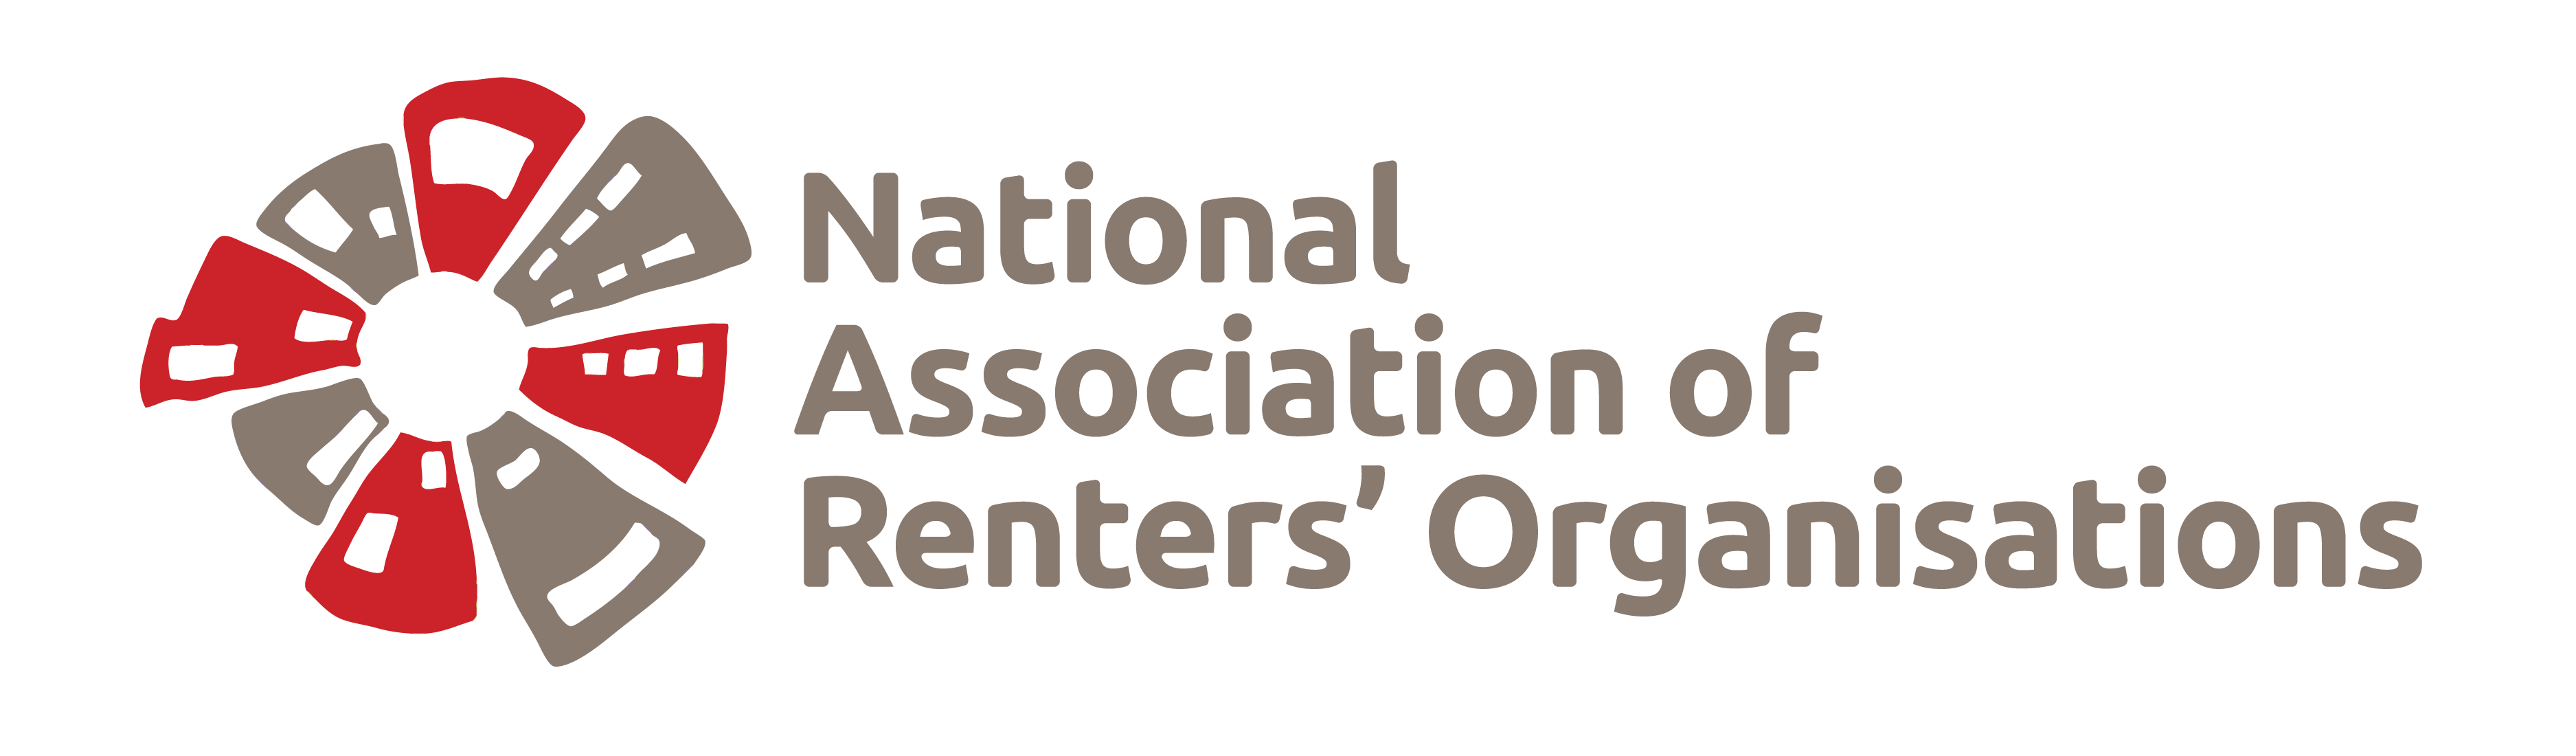 National Association of Renters